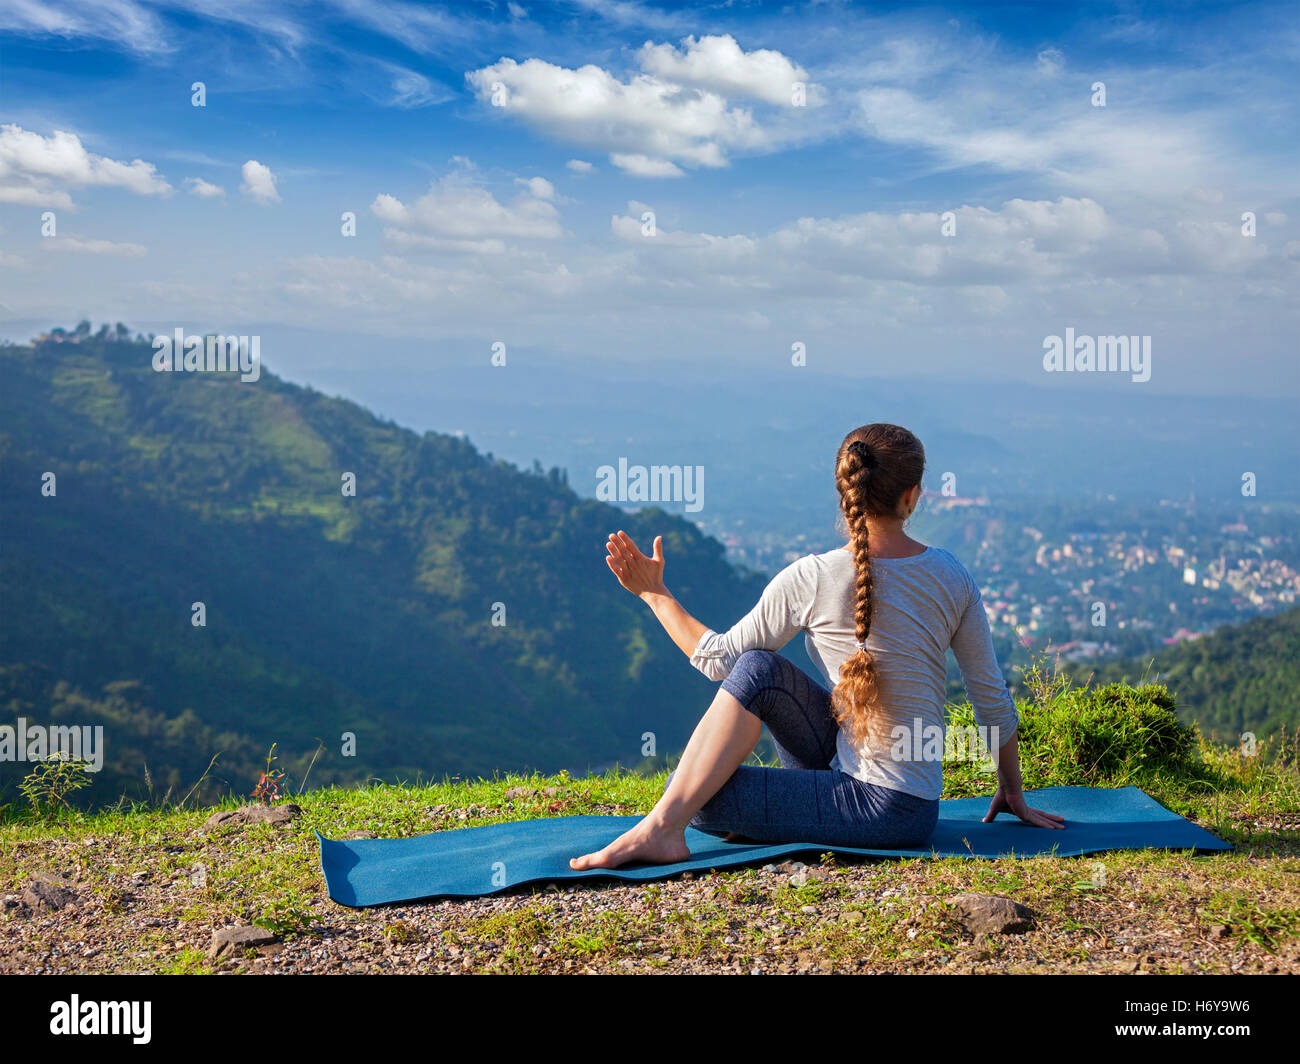 Woman doing Hatha yoga asana outdoors Stock Photo